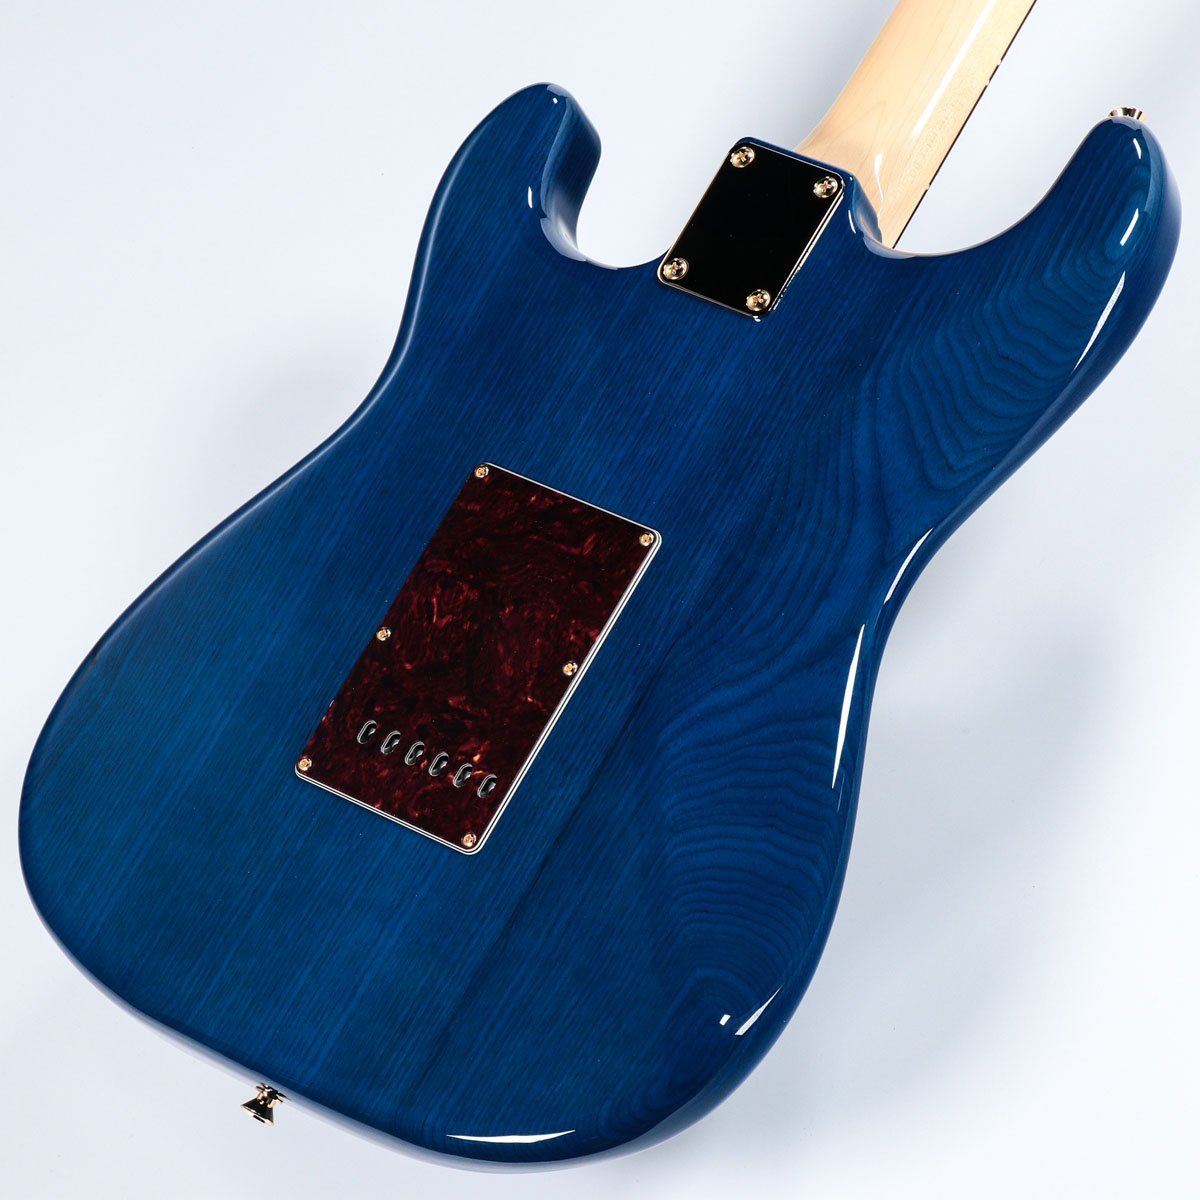 Fender ISHIBASHI FSR MIJ Traditional 60s Stratocaster Ash Body w 